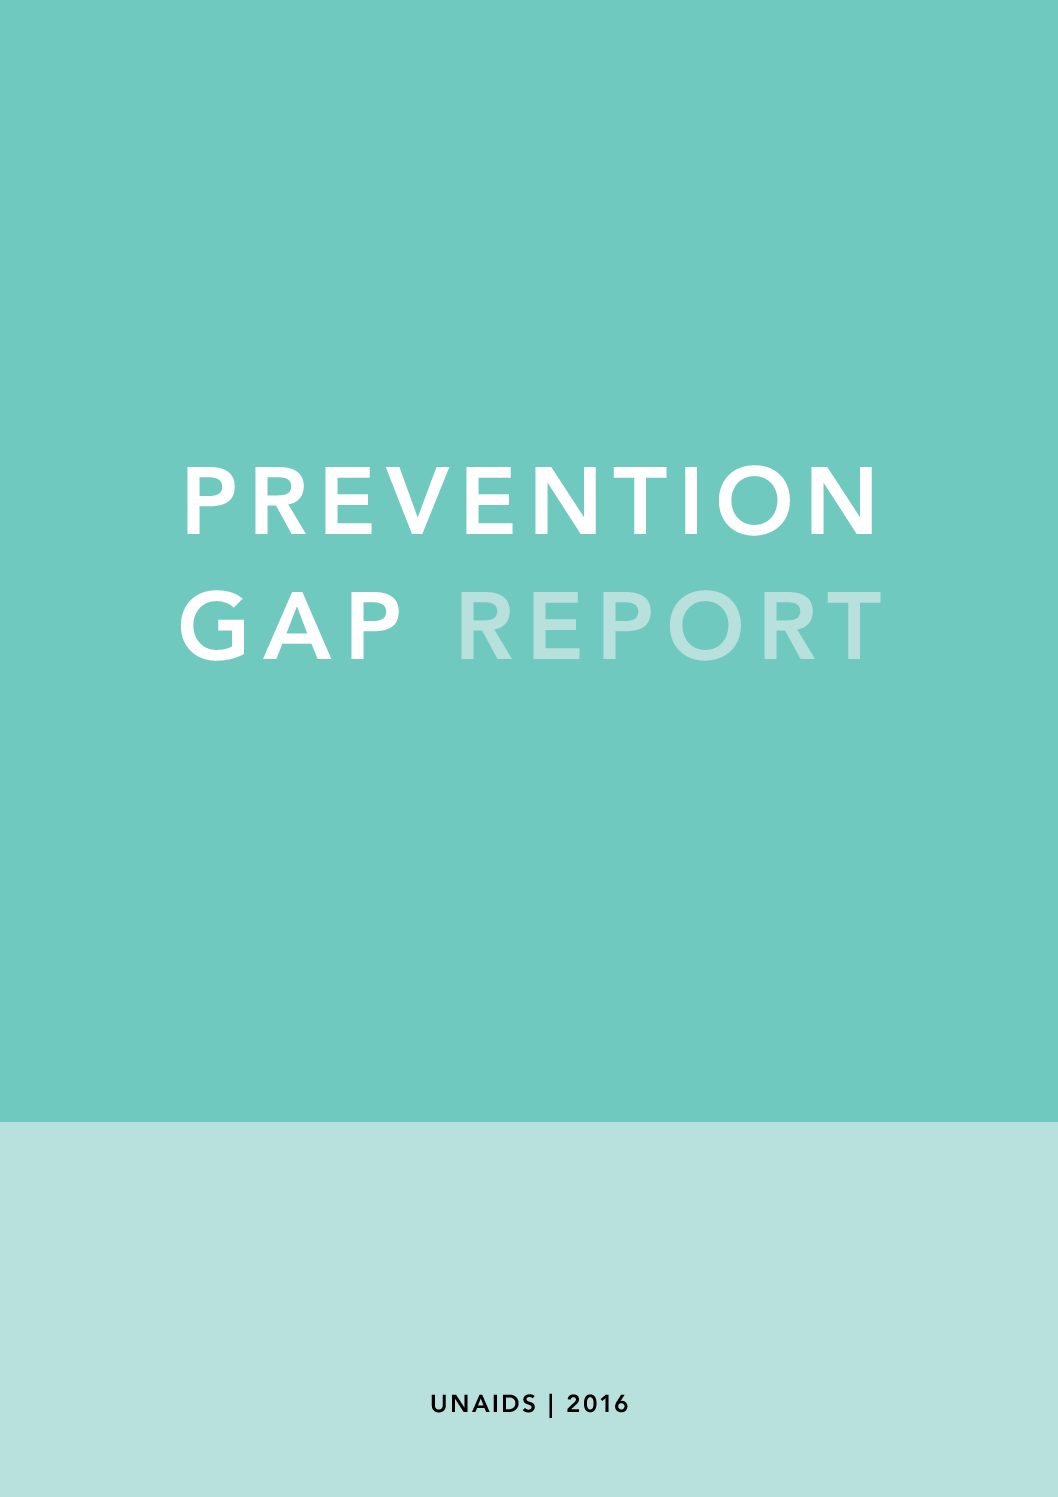 Prevention gap report 2016